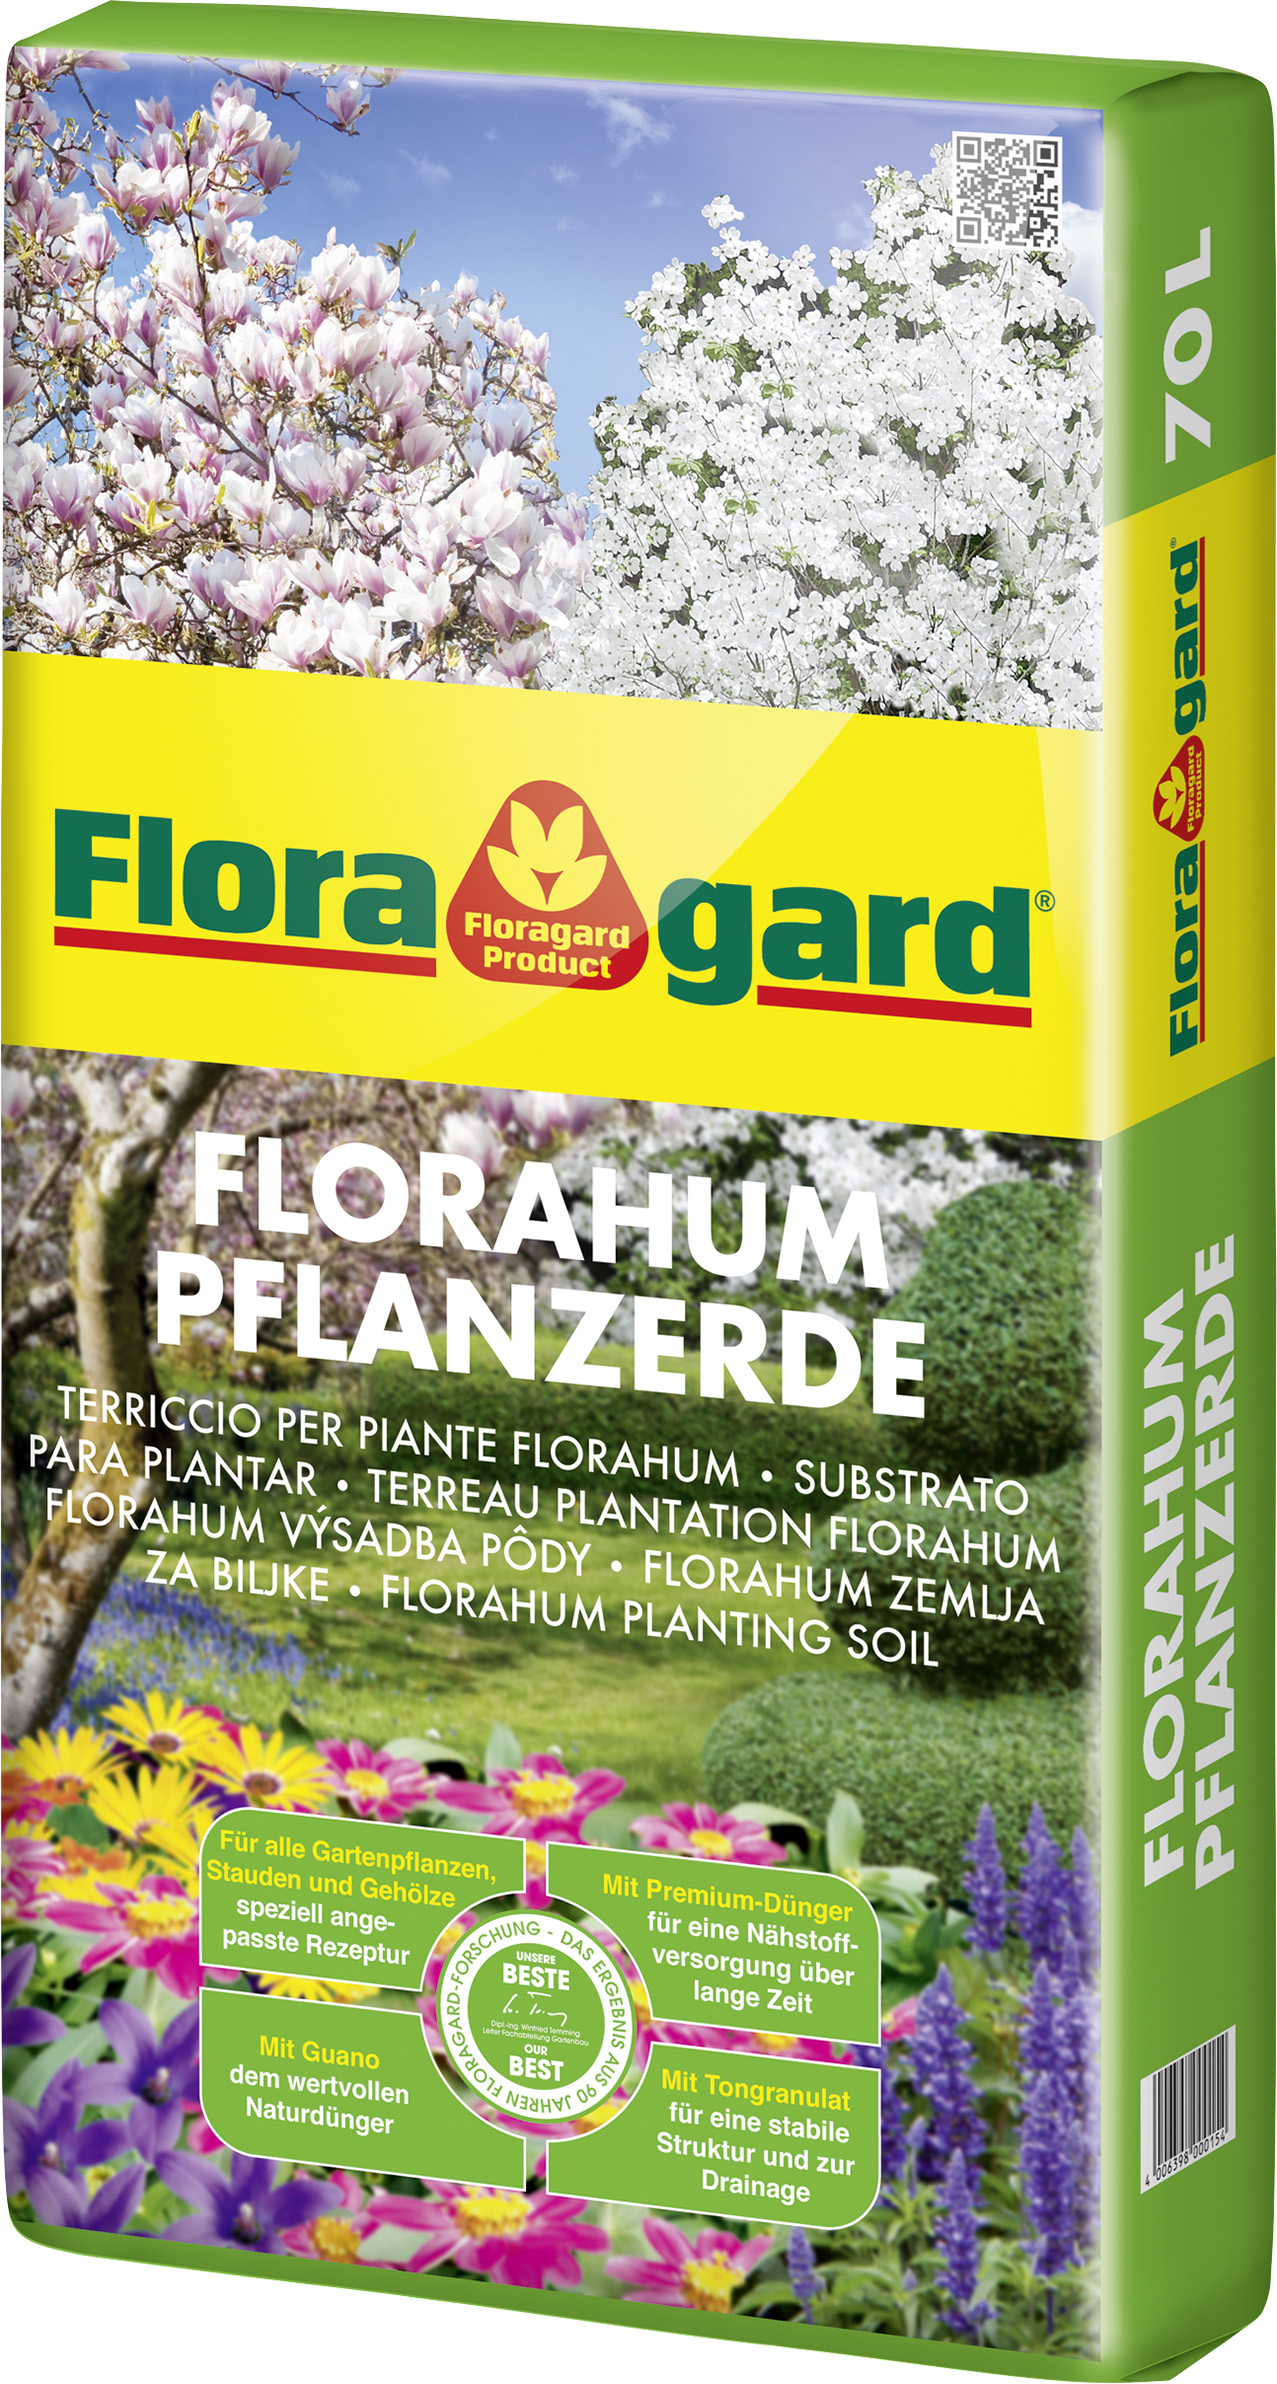 Gartenbedarf Onlineshop Frisch Floragard Florahum Pflanzerde 70l